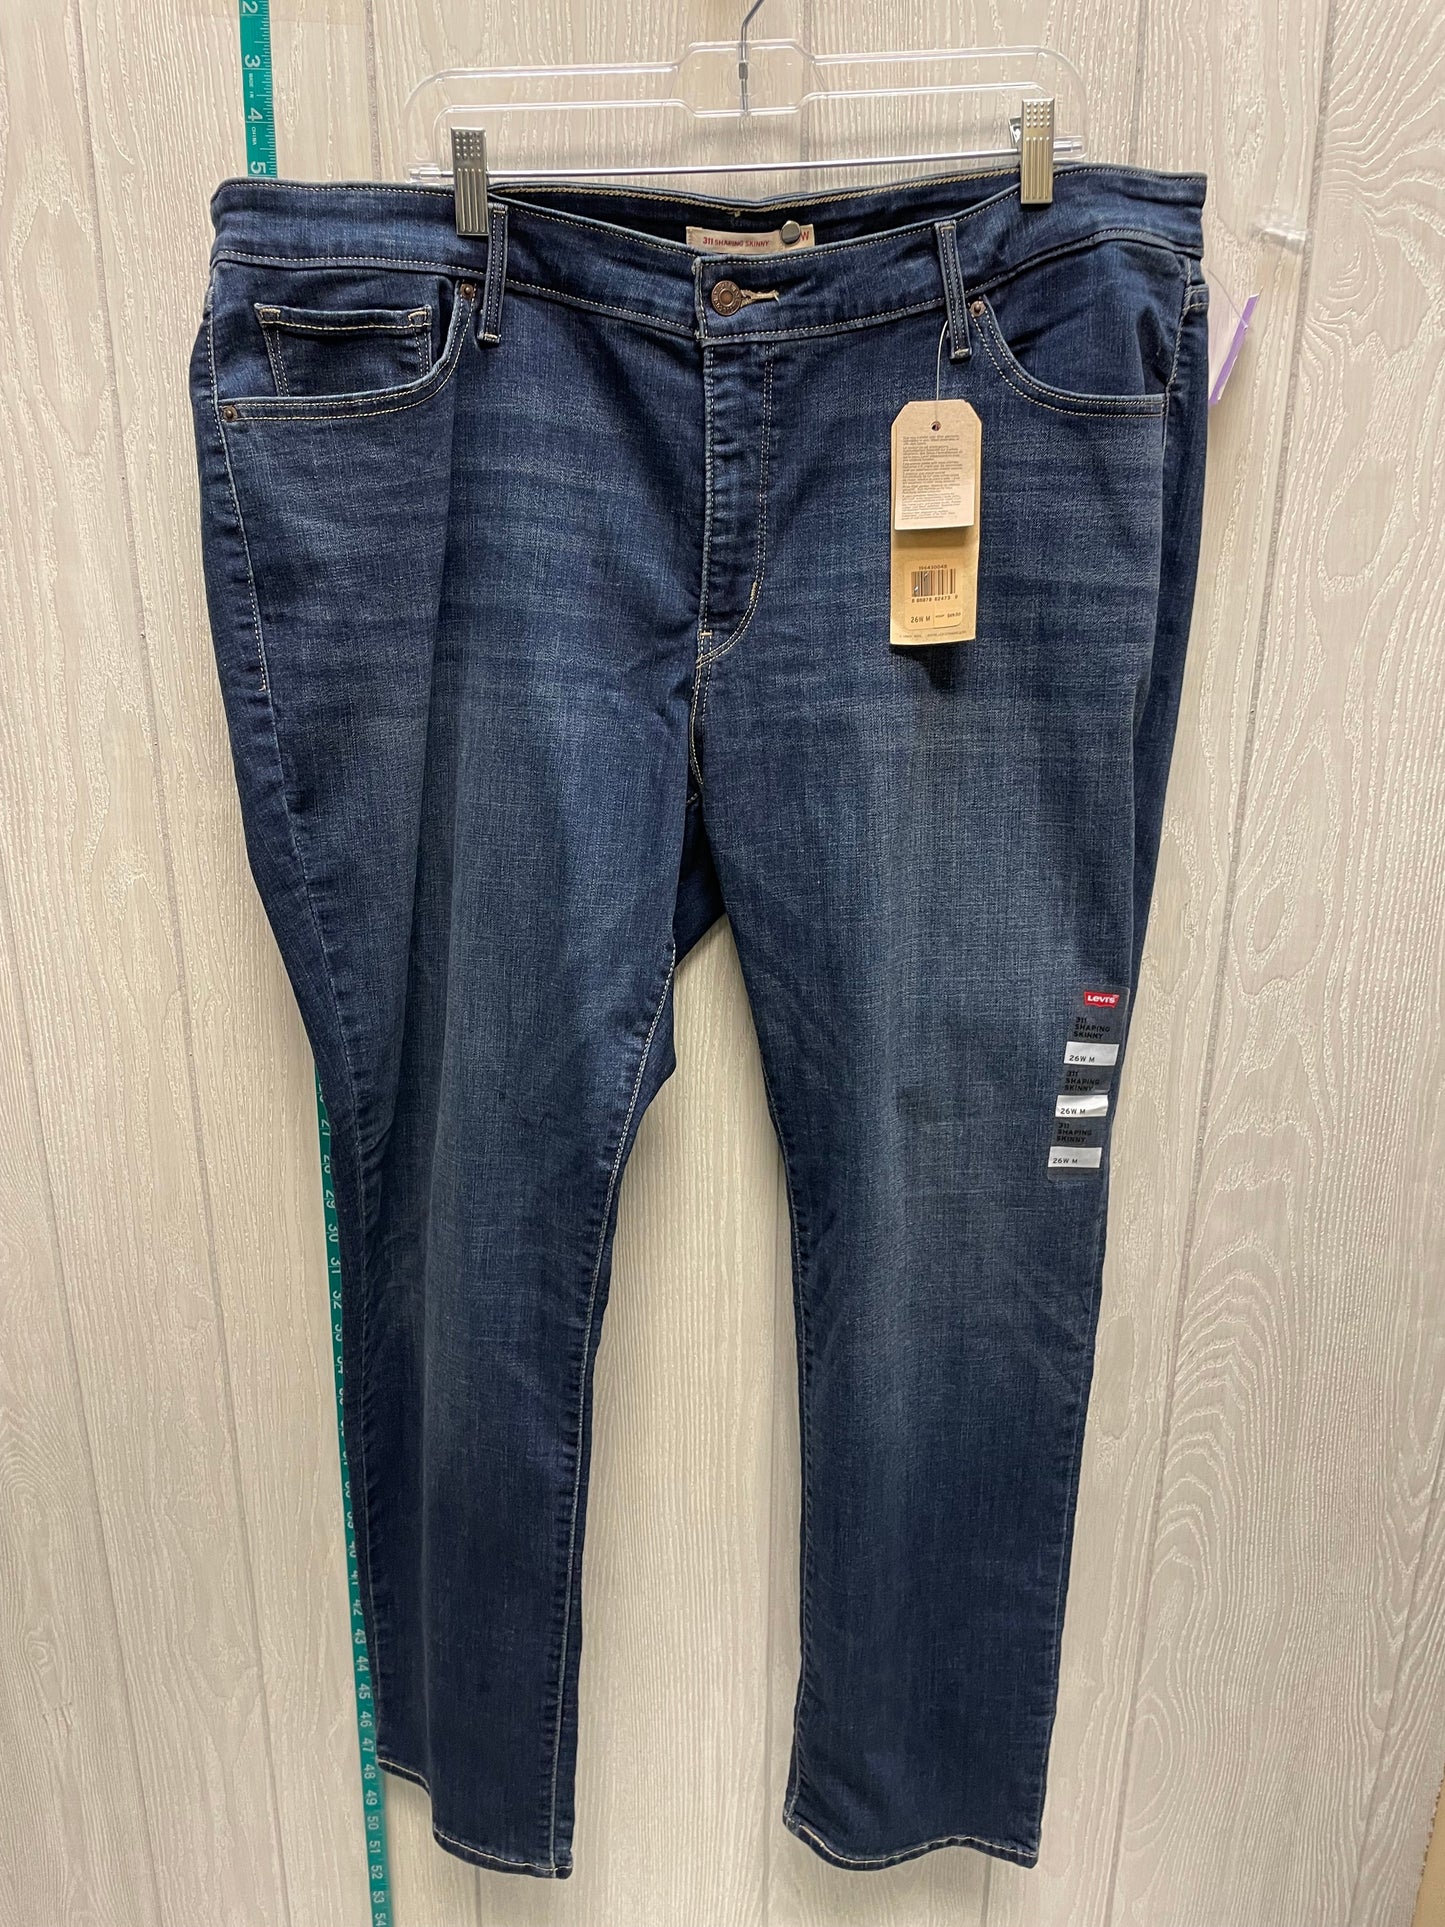 Blue Denim Jeans Skinny Levis, Size 26